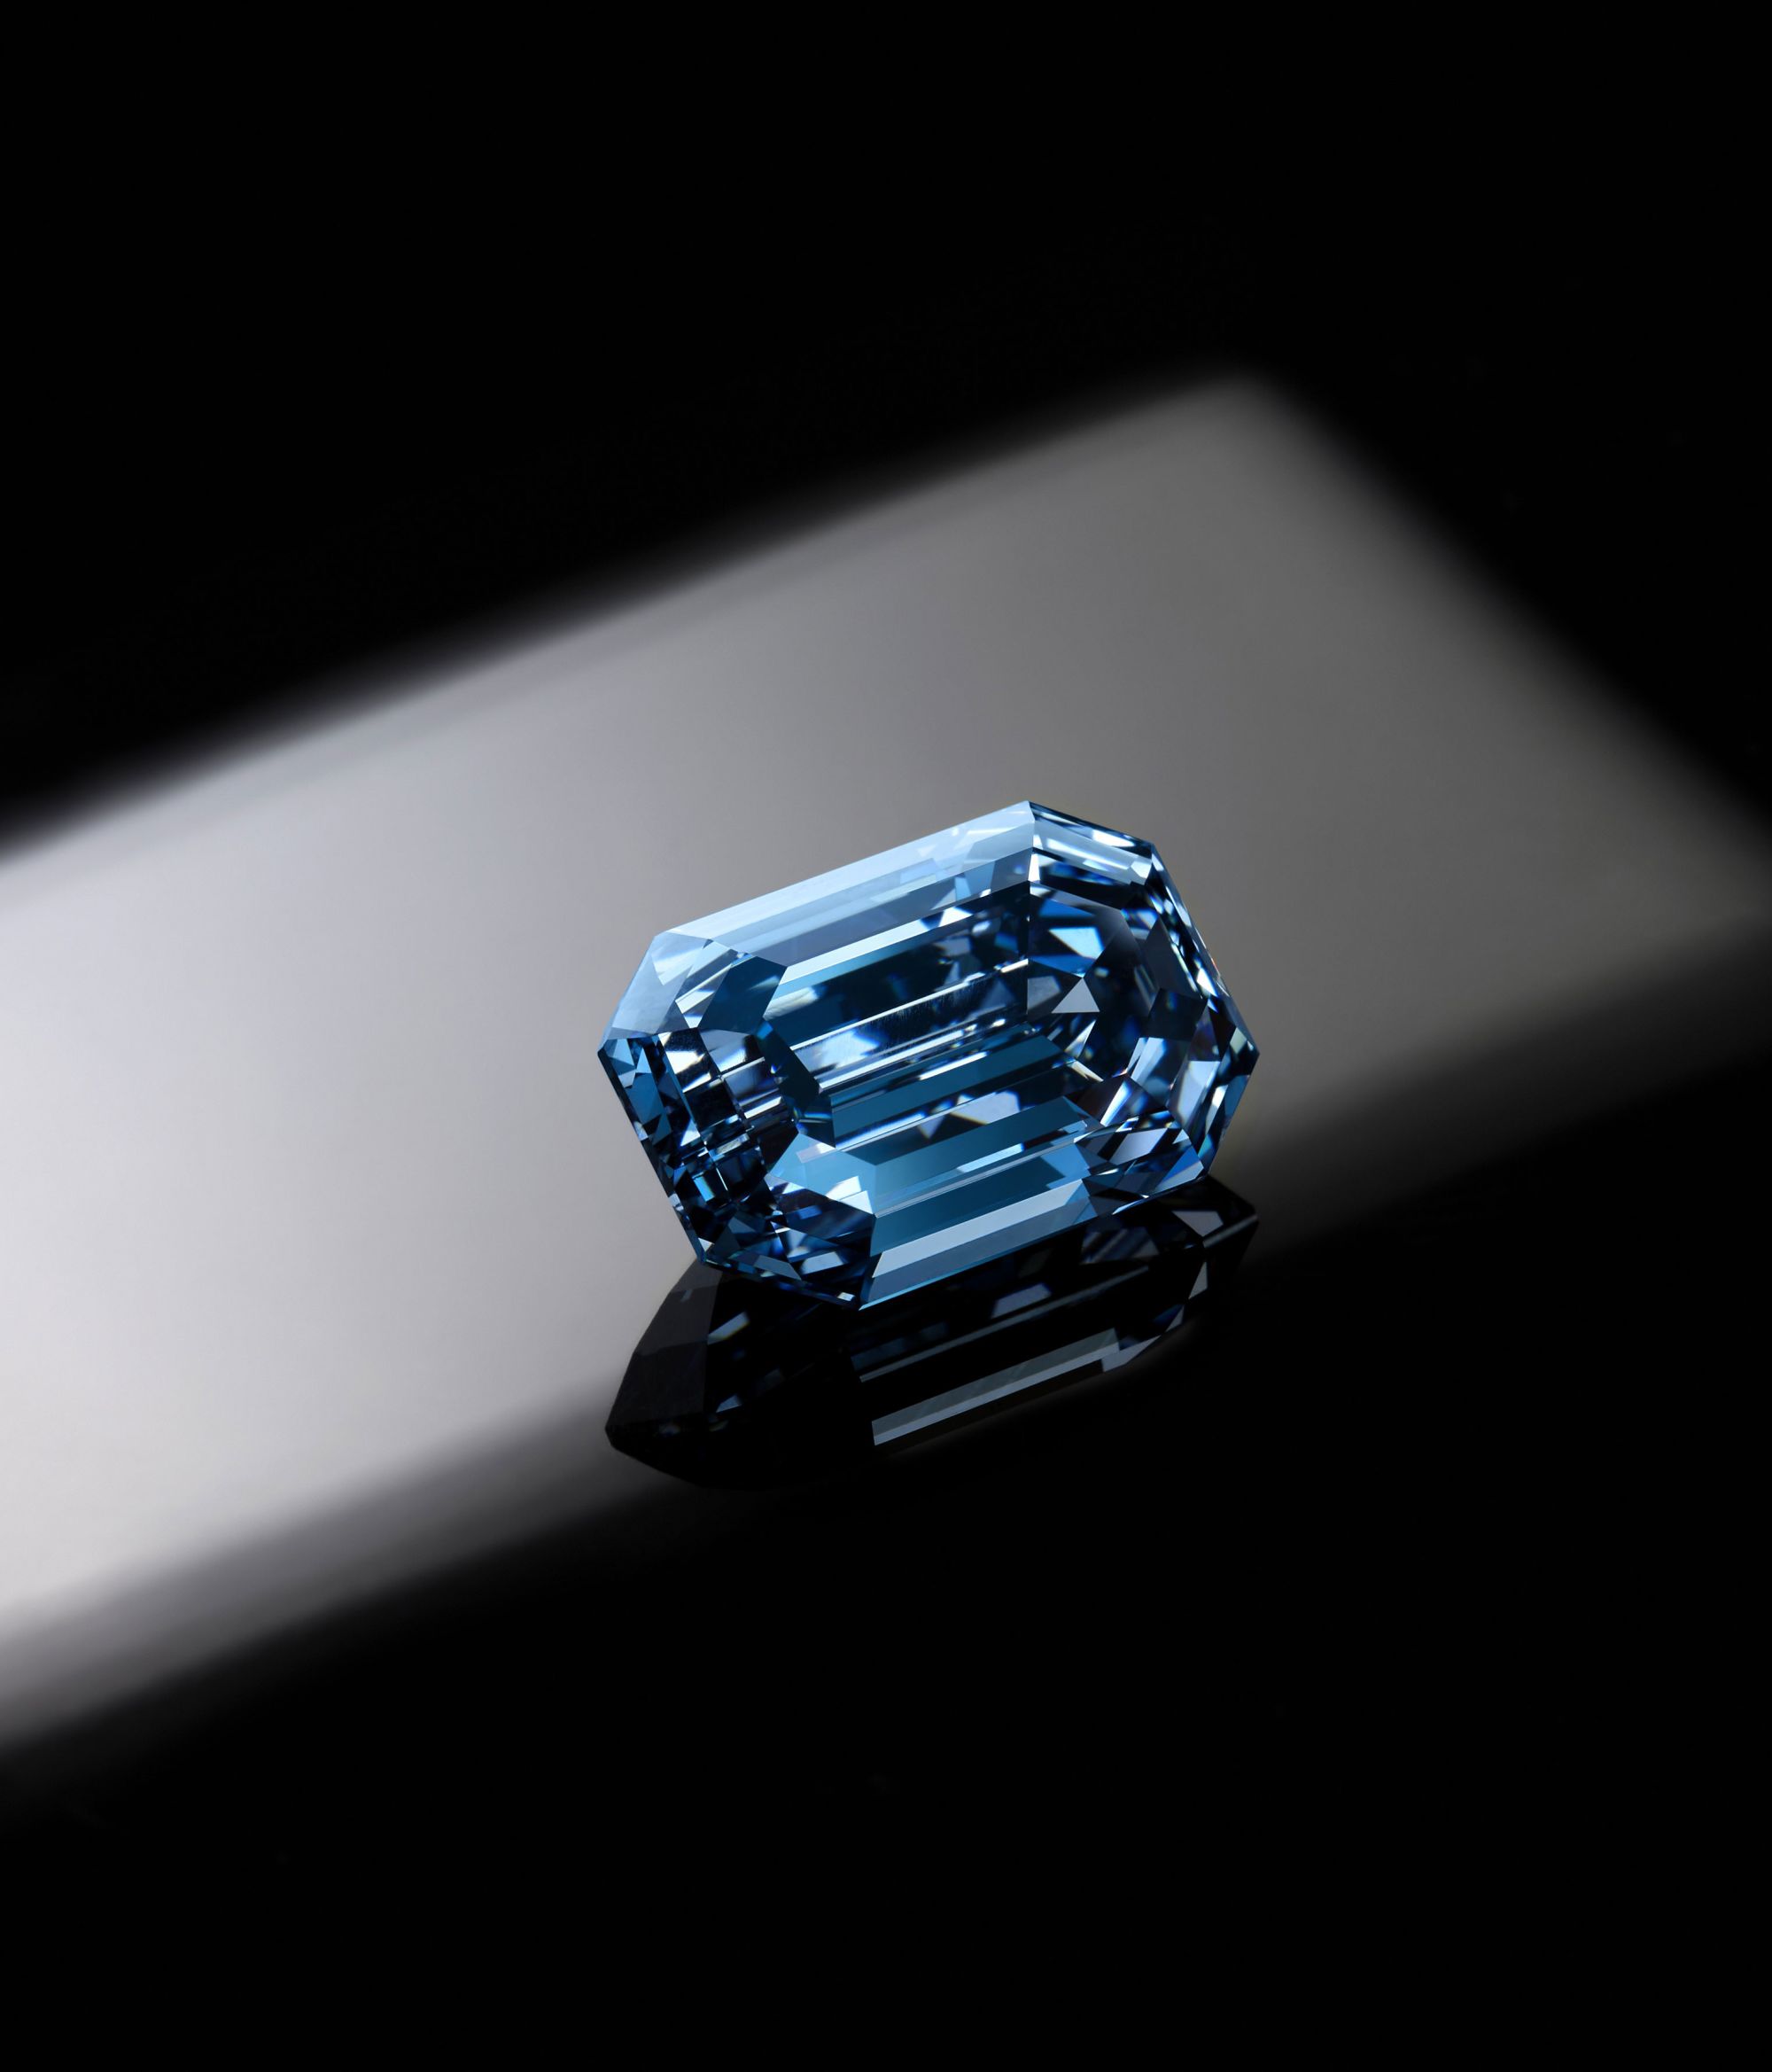 https://media.cnn.com/api/v1/images/stellar/prod/220216035630-02-cullinan-blue-diamond.jpg?q=w_2000,c_fill